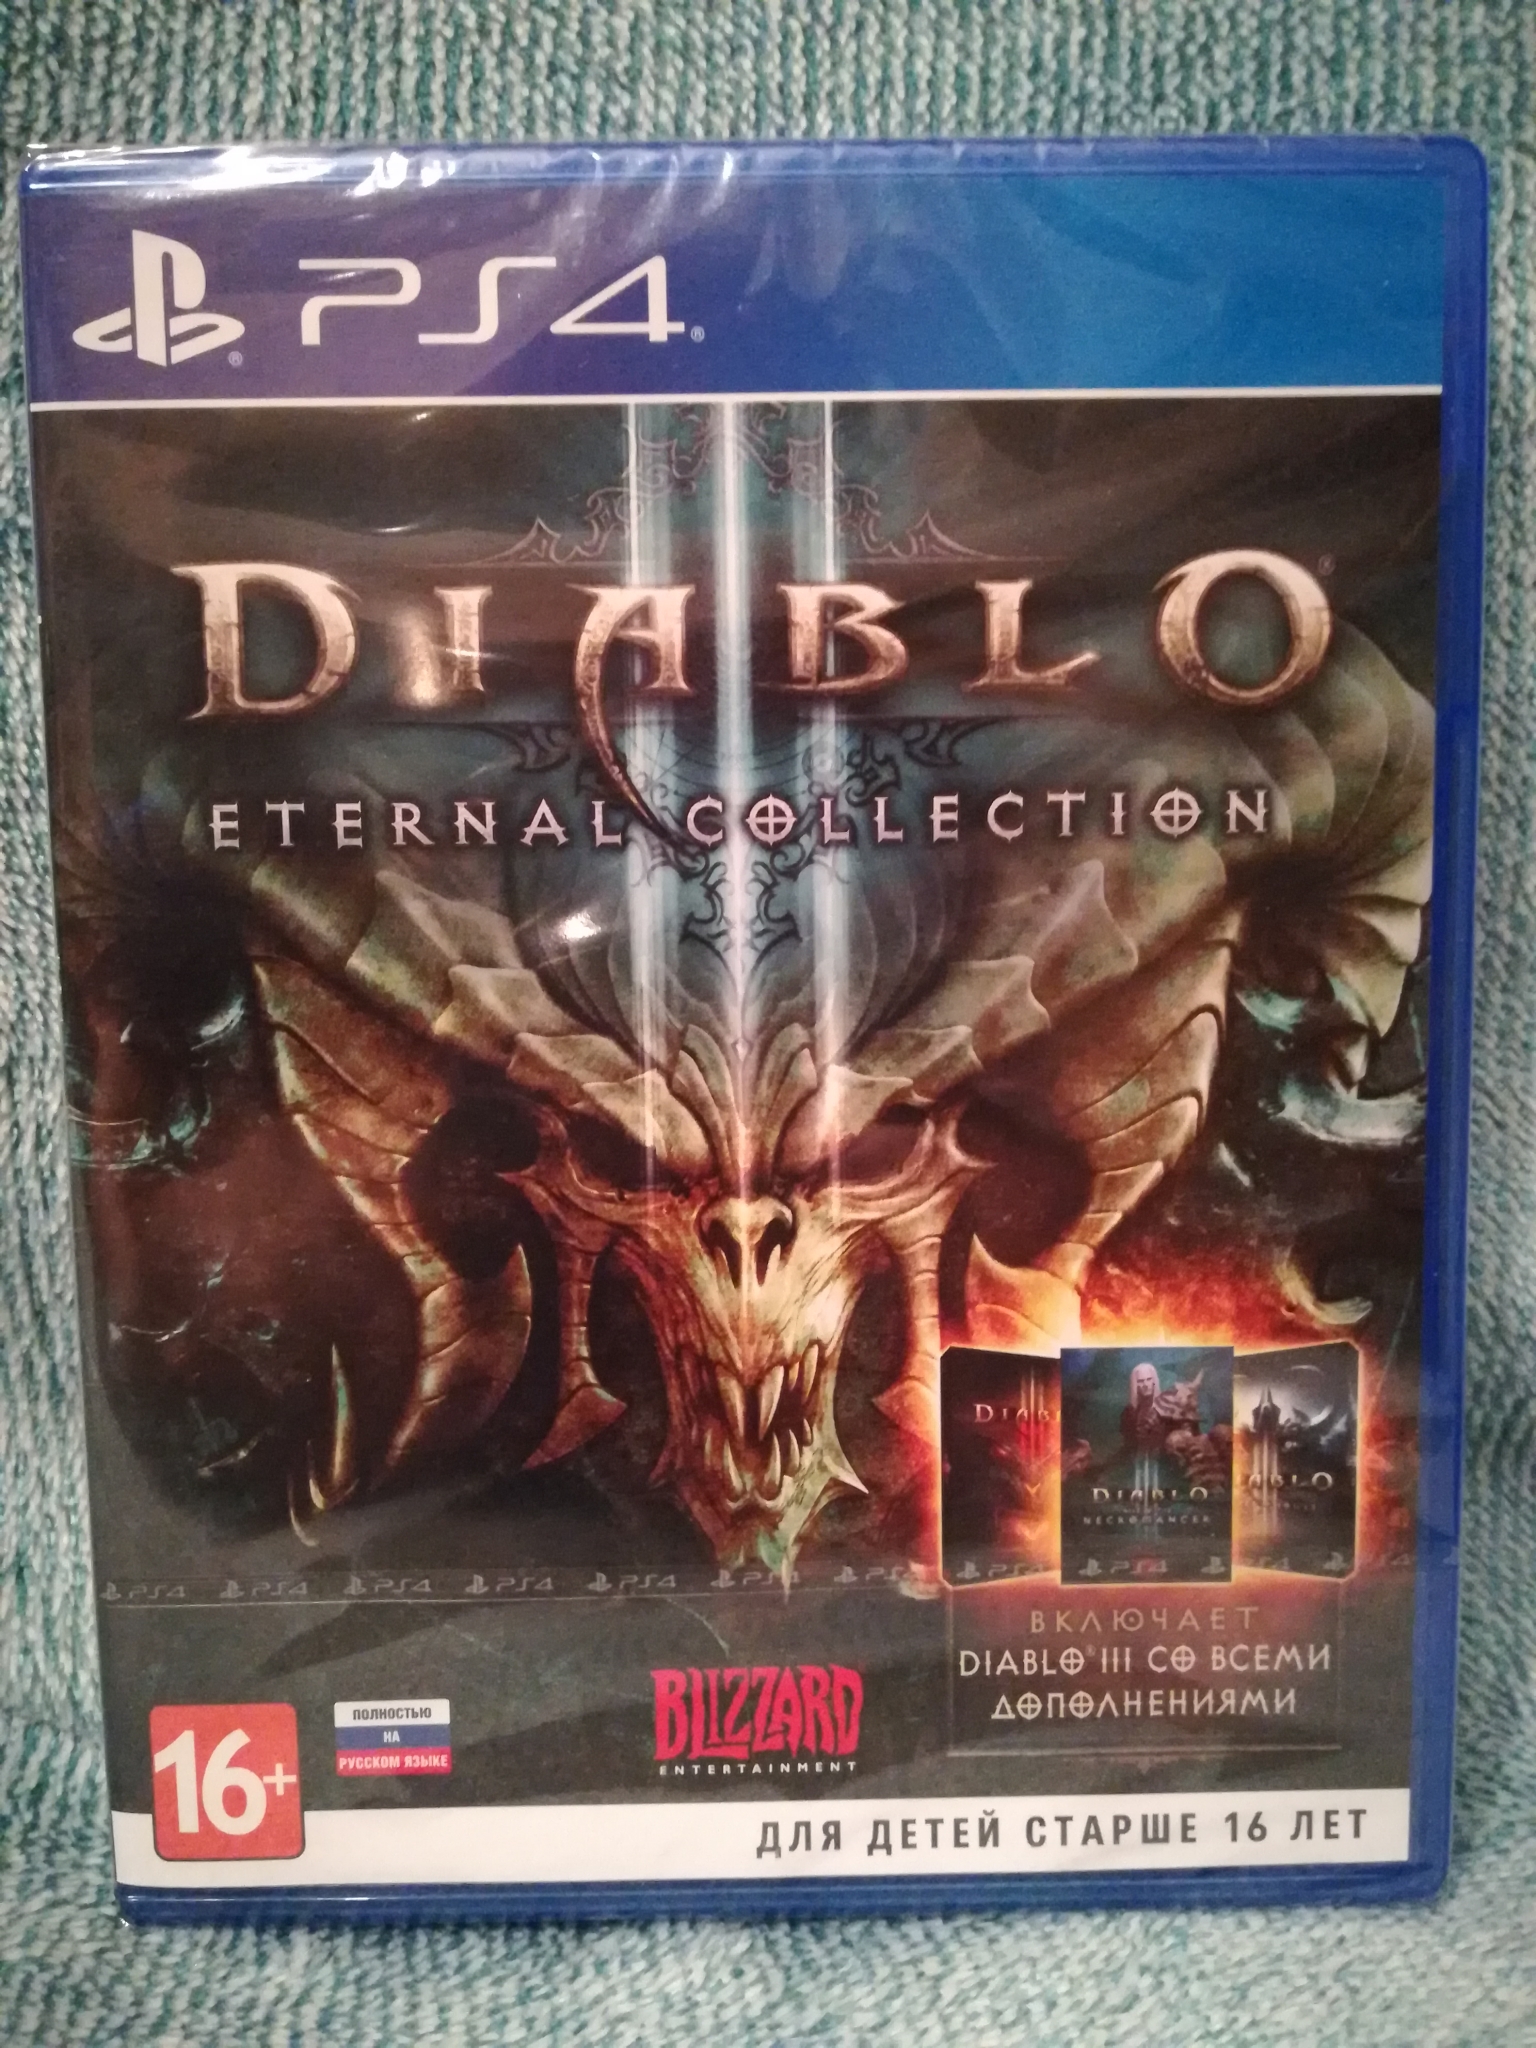 Диабло на пс5. Diablo 3 Eternal collection ps4. Diablo III 3 ps3. Diablo 3 PS 4 диск. Diablo 3 Eternal collection ps4 Disk.